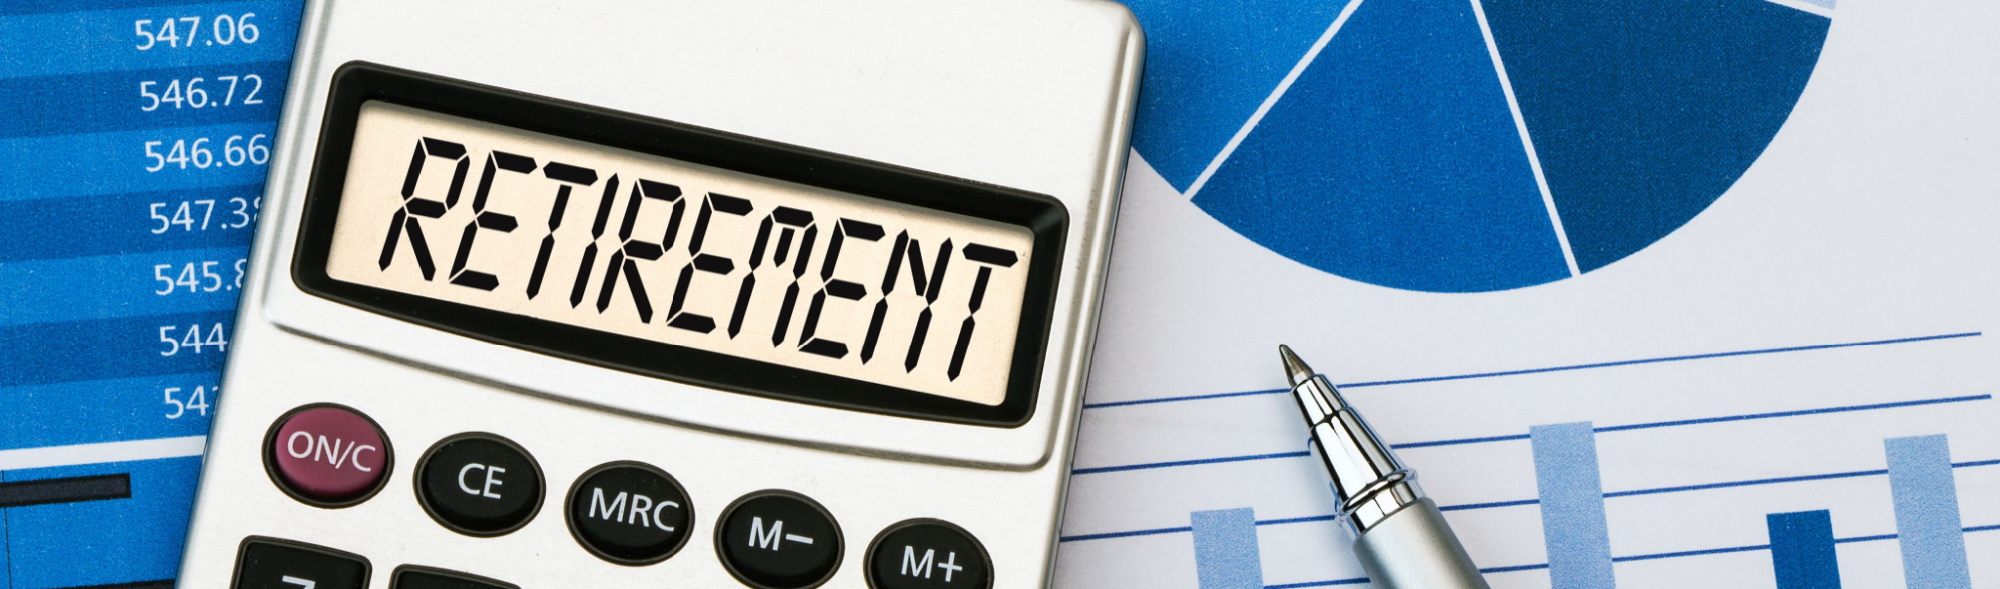 Retirement Calculator Concord, MO | Financial Advisors | Retirement Consultant | Wealth Management Near Concord